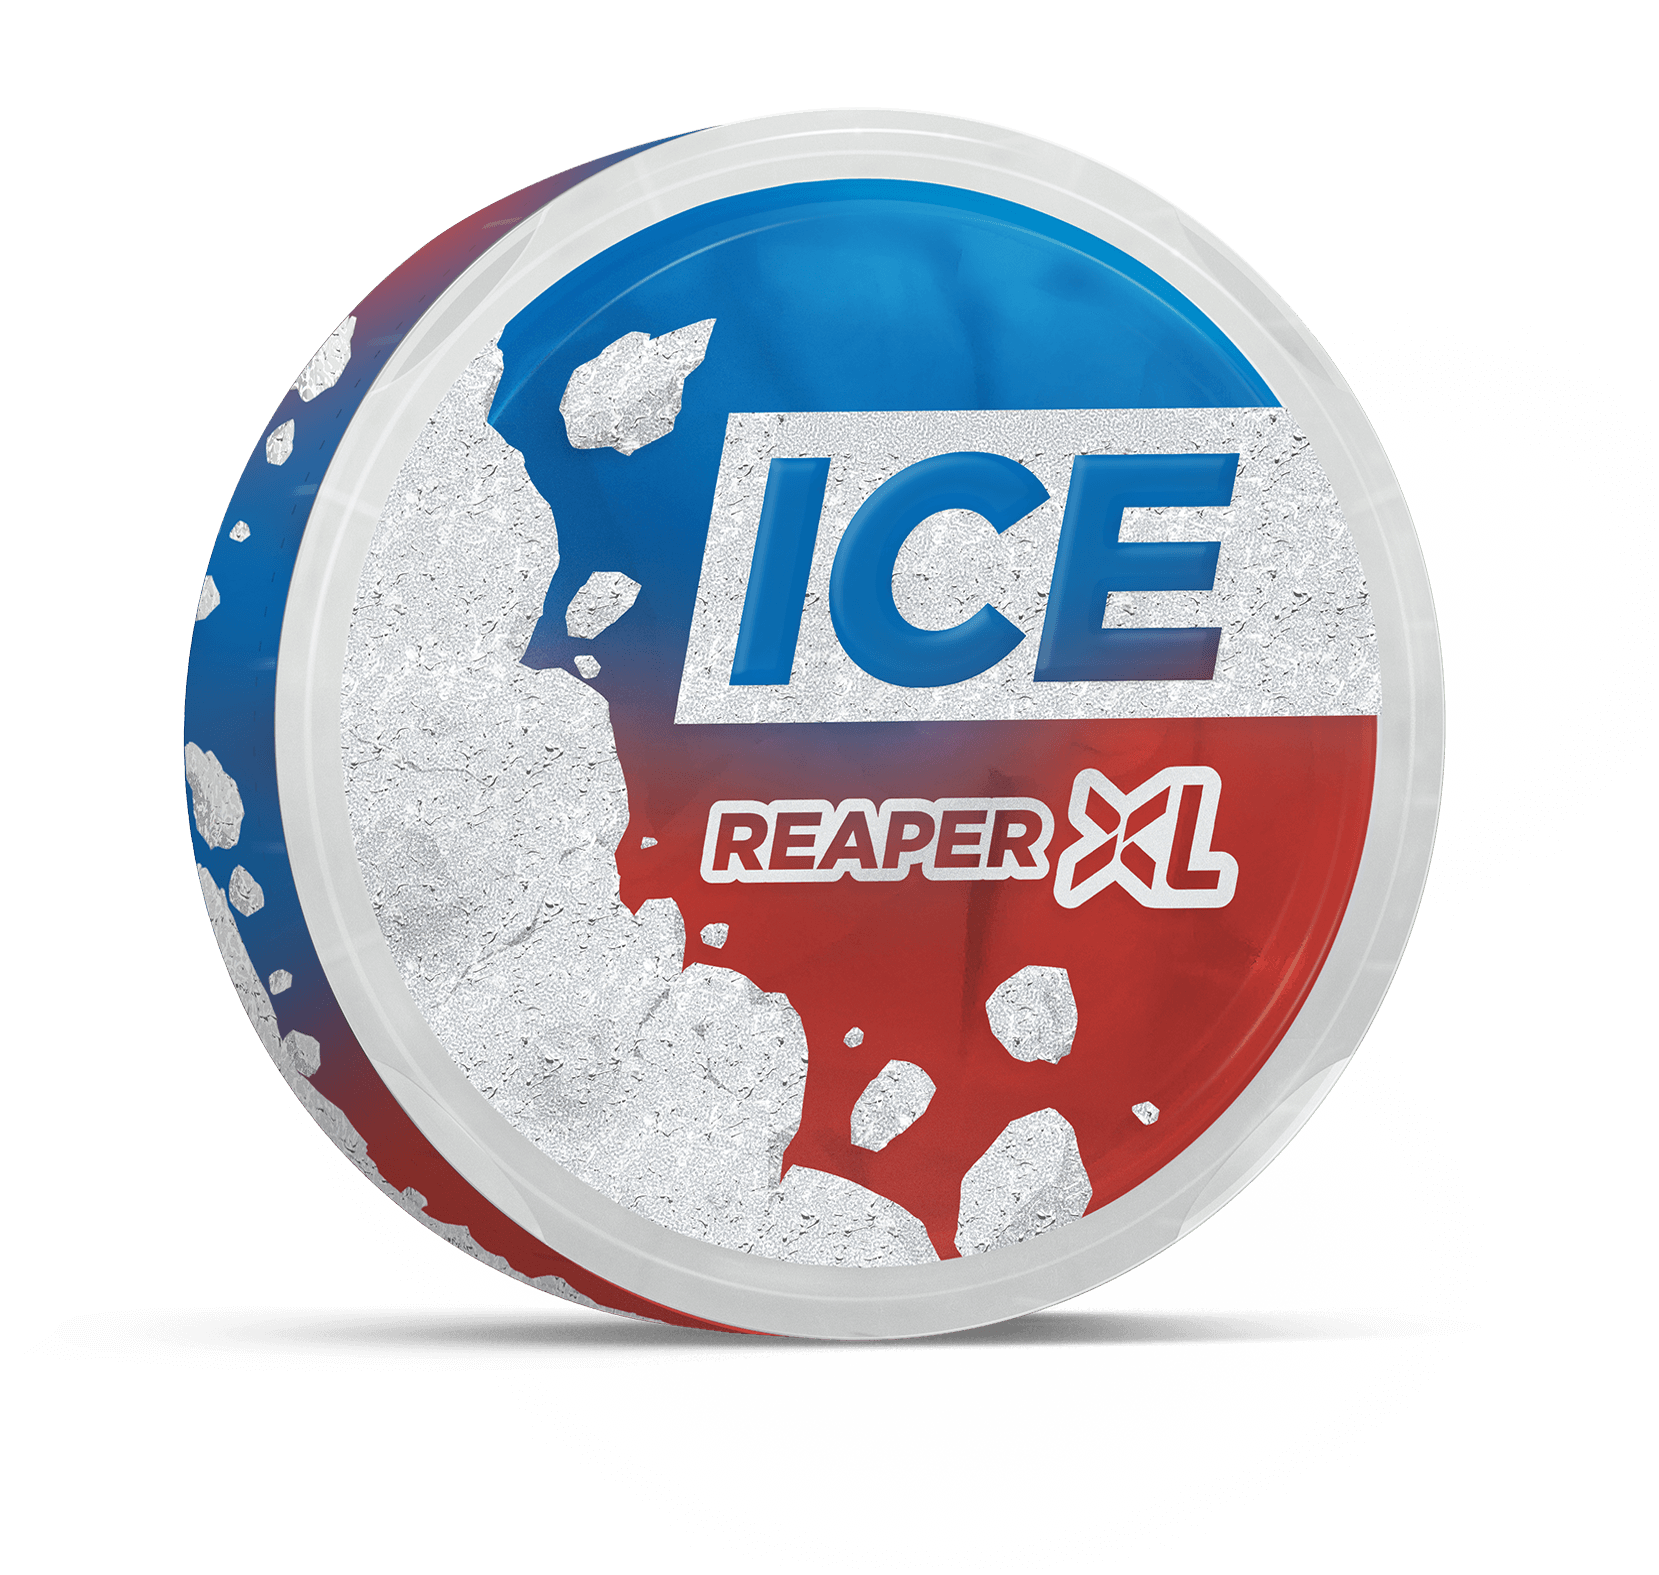 THE ICE XL